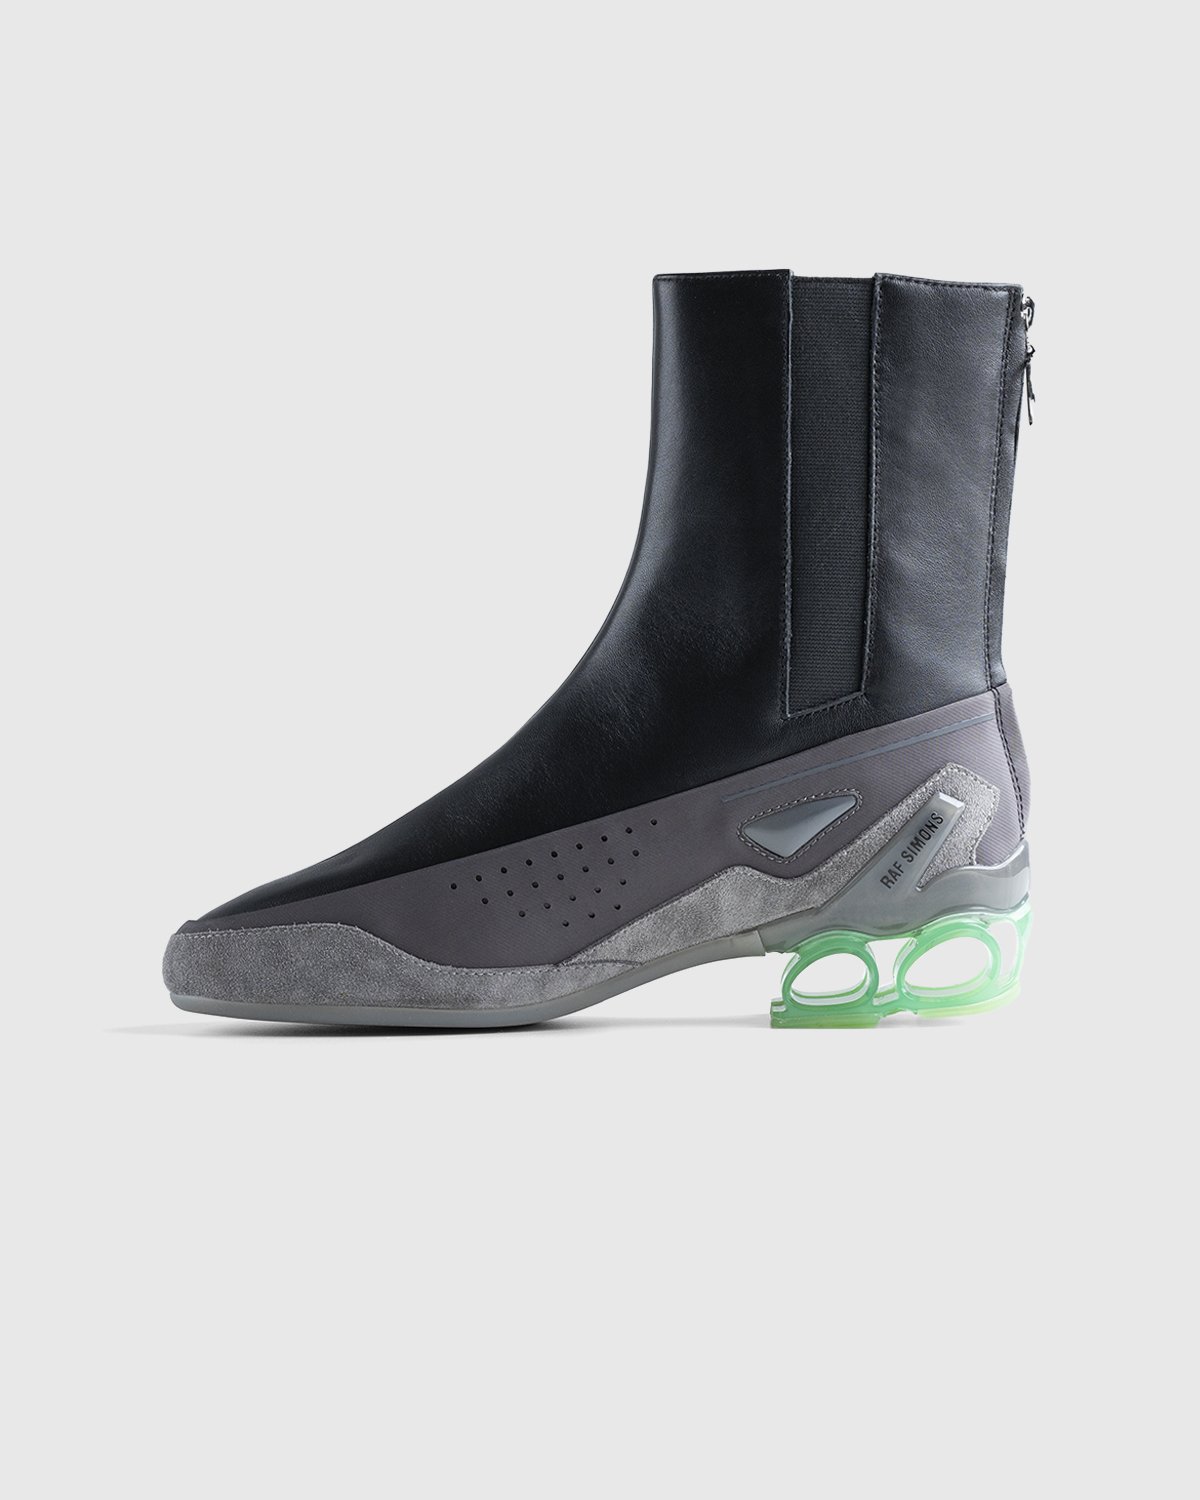 Raf Simons - Cycloid 4 Black Grey Green - Footwear - Black - Image 2